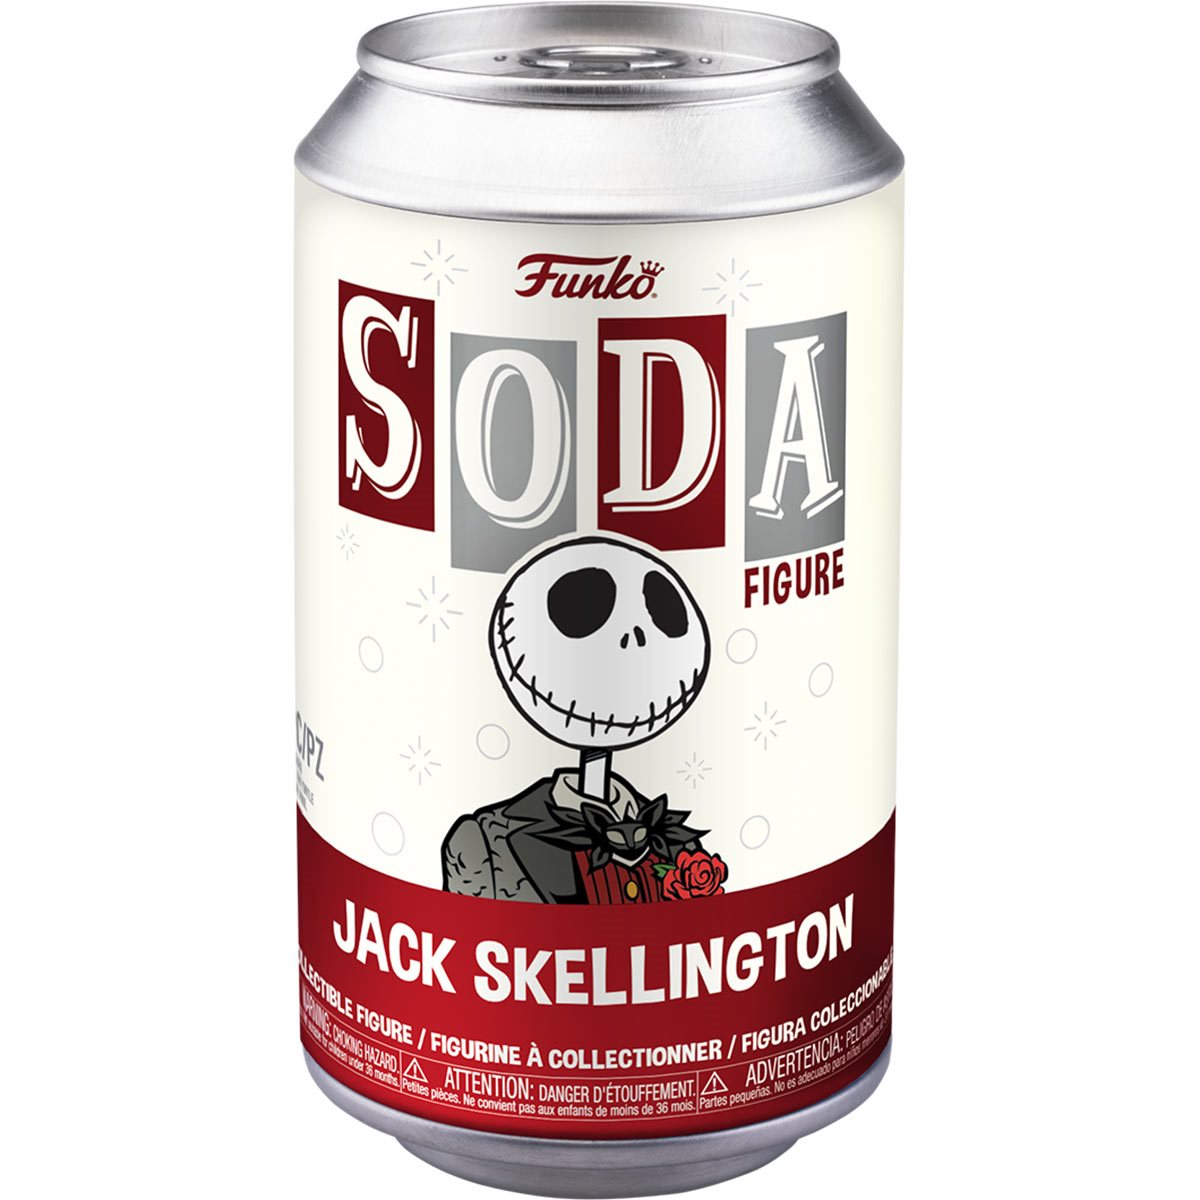 Vinyl Soda Formal Jack Skellington